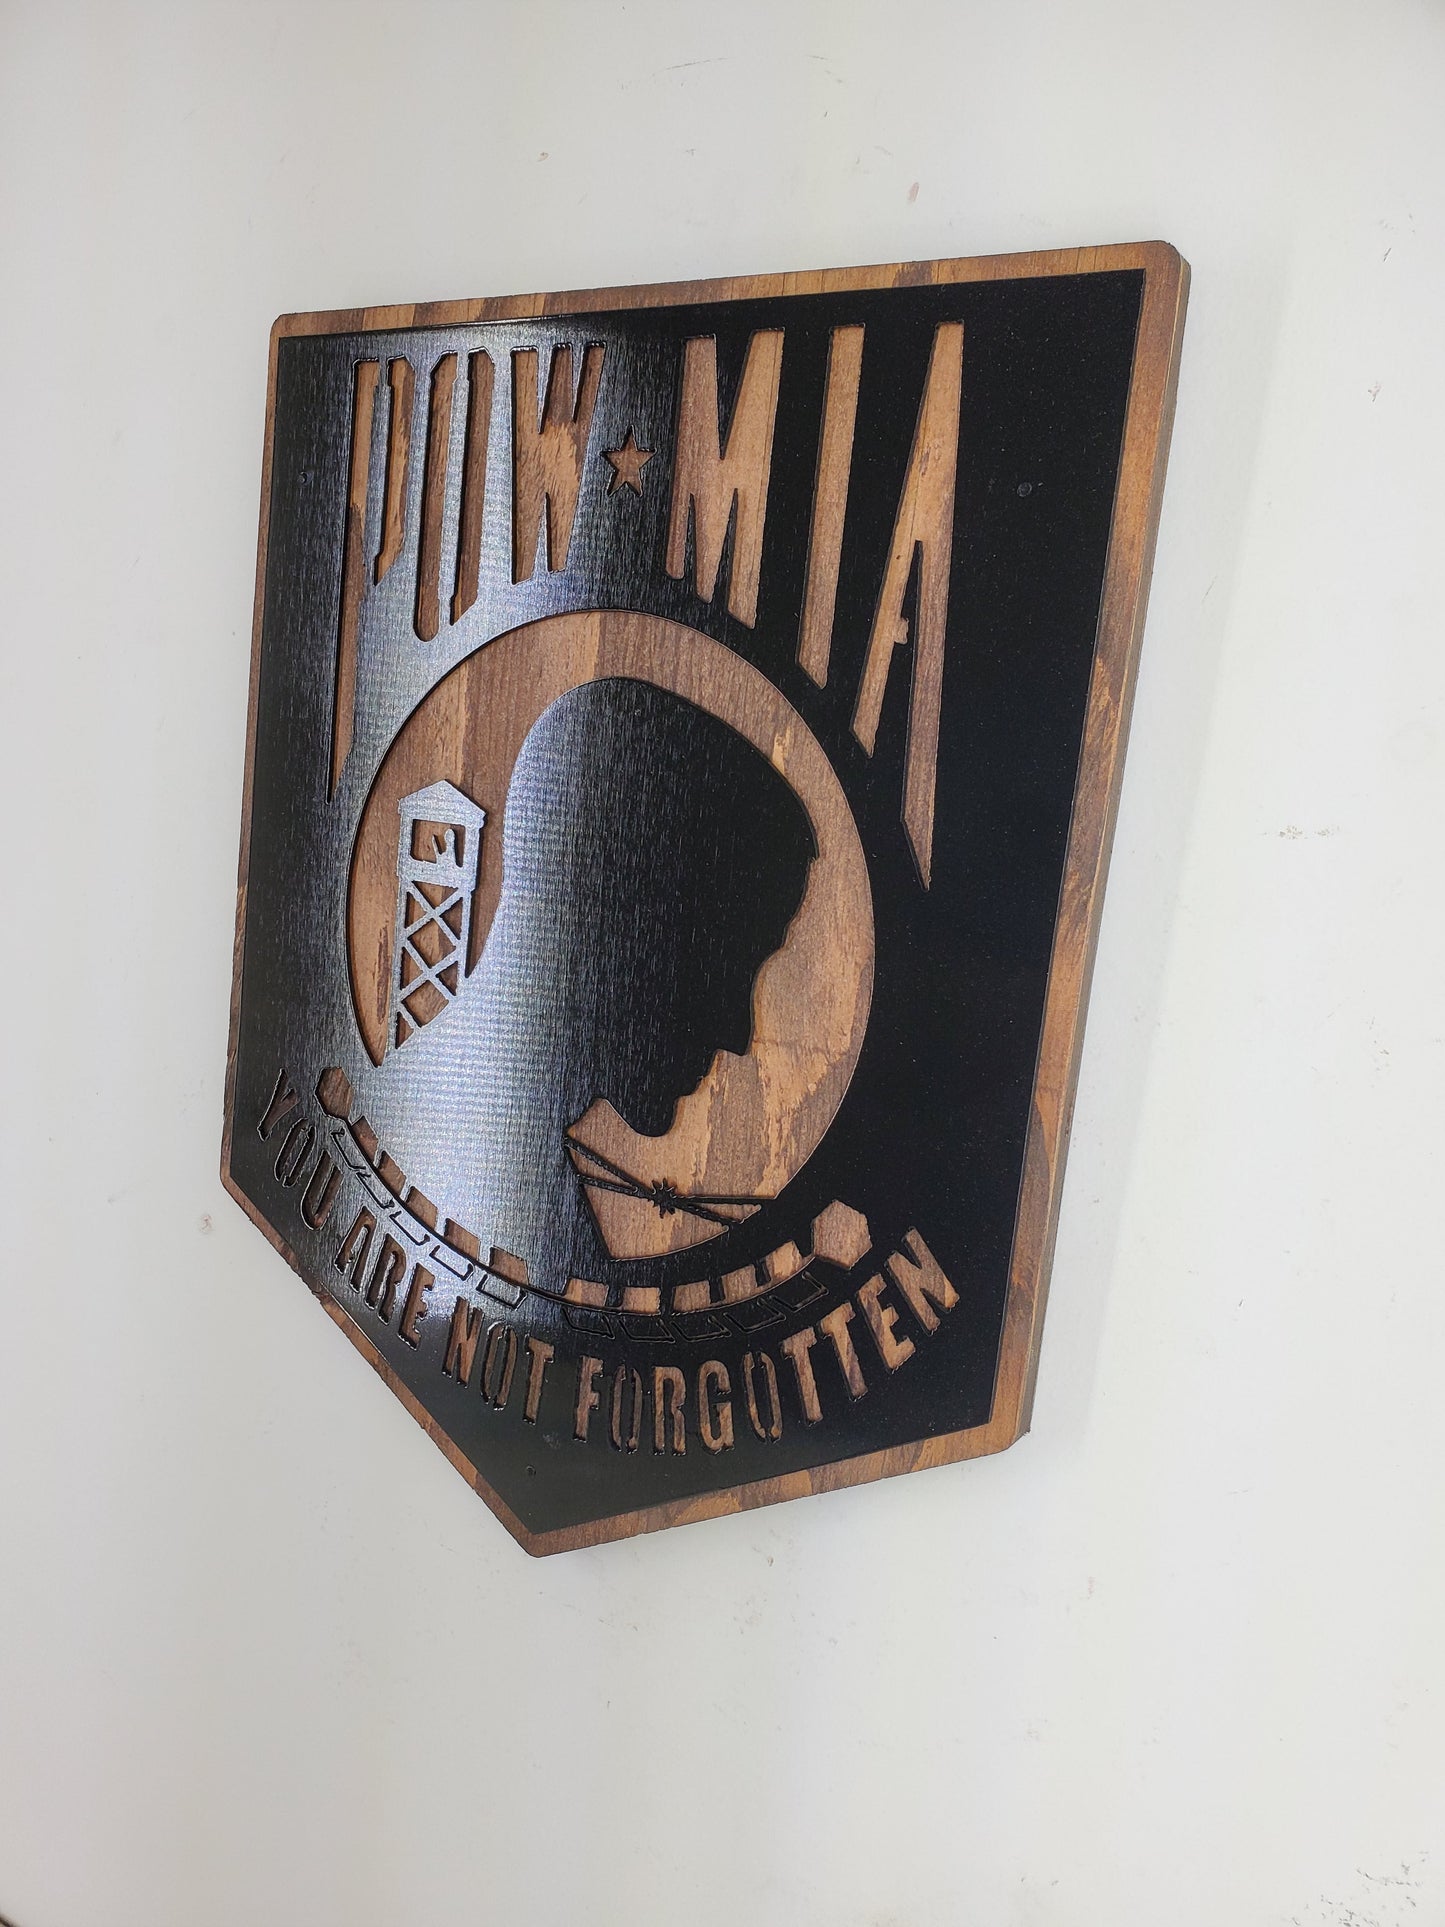 POW MIA Plaque Metal Art on Wood